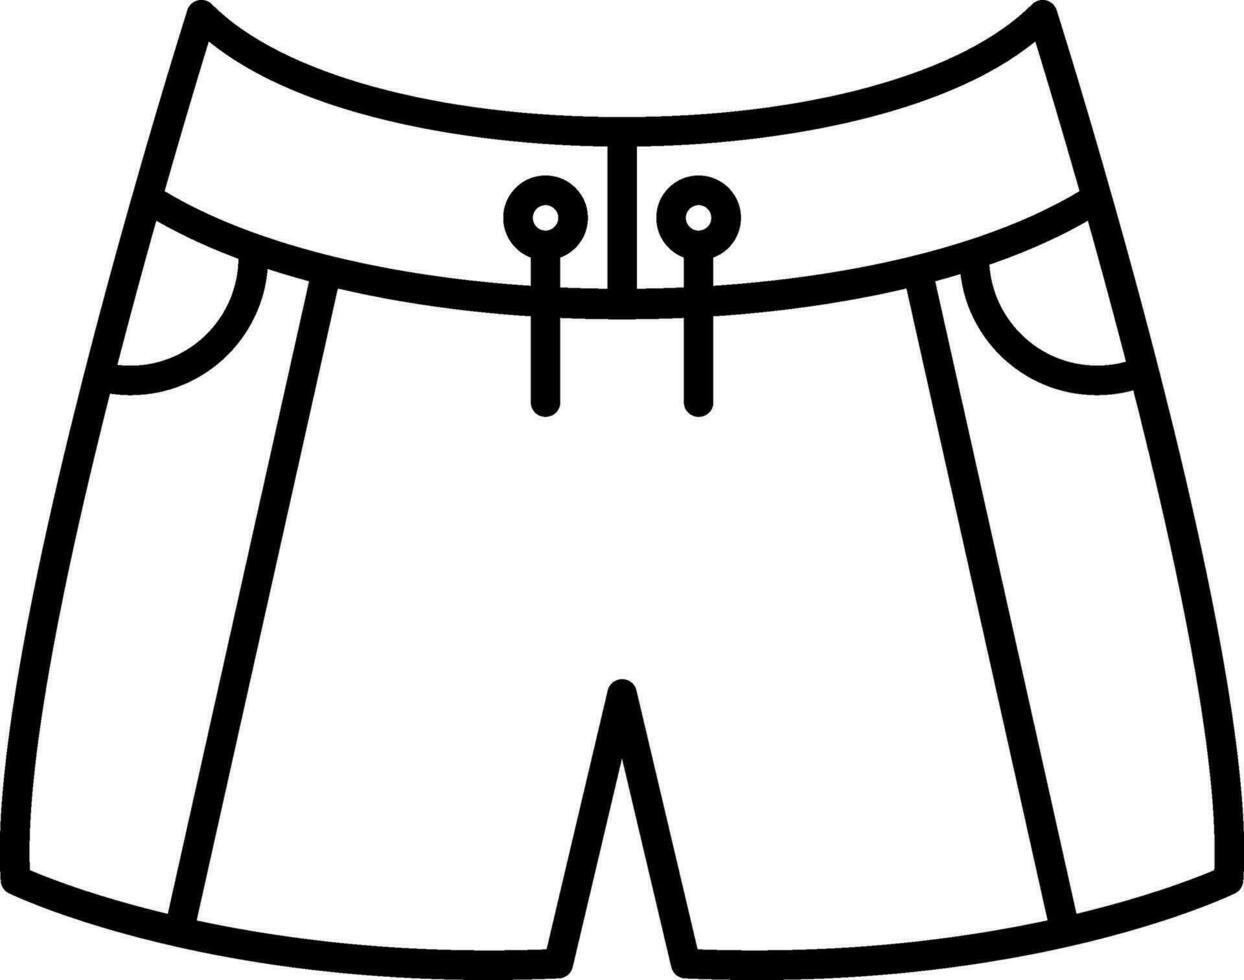 Shorts Vector Icon